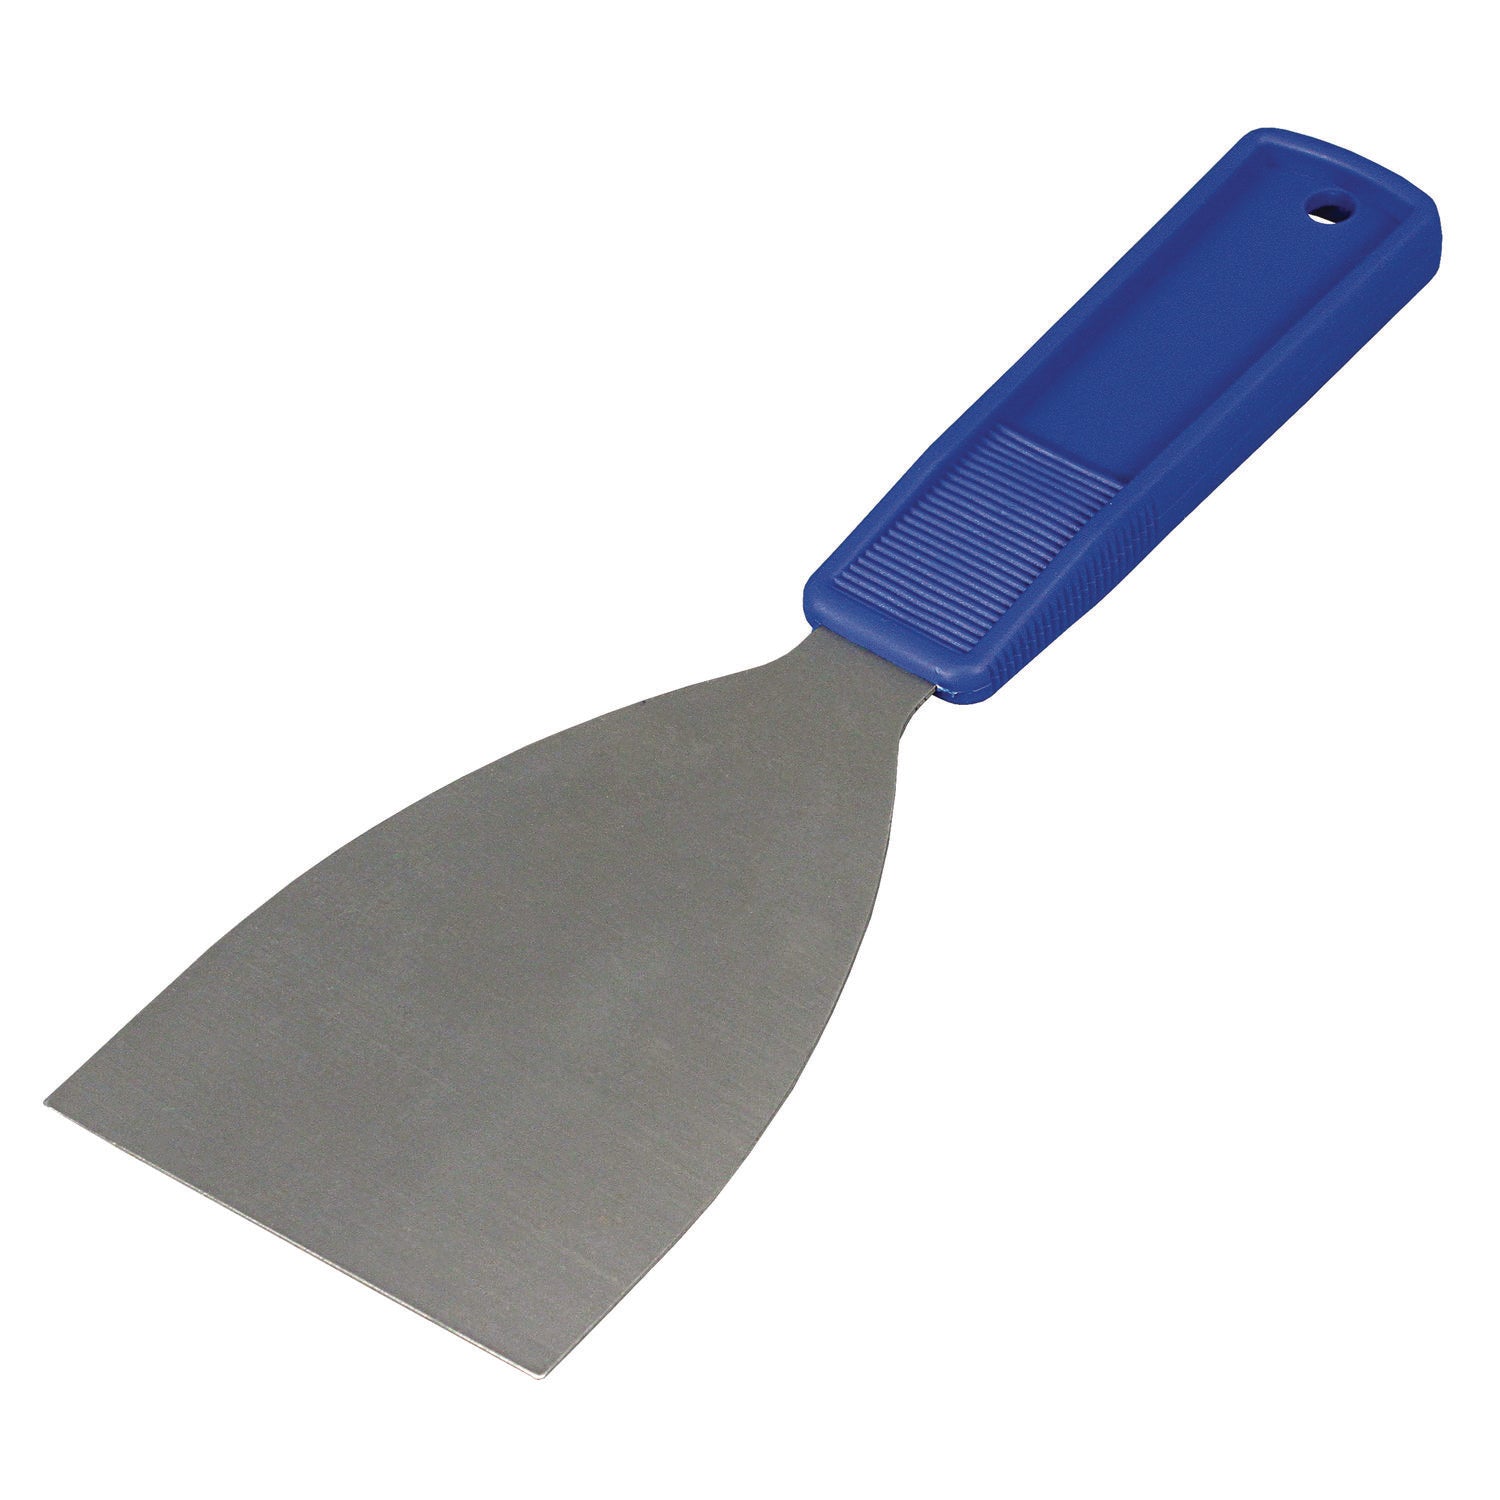 putty-knife-3-wide-stainless-steel-blade-blue-polypropylene-handle_imp3401dz - 2